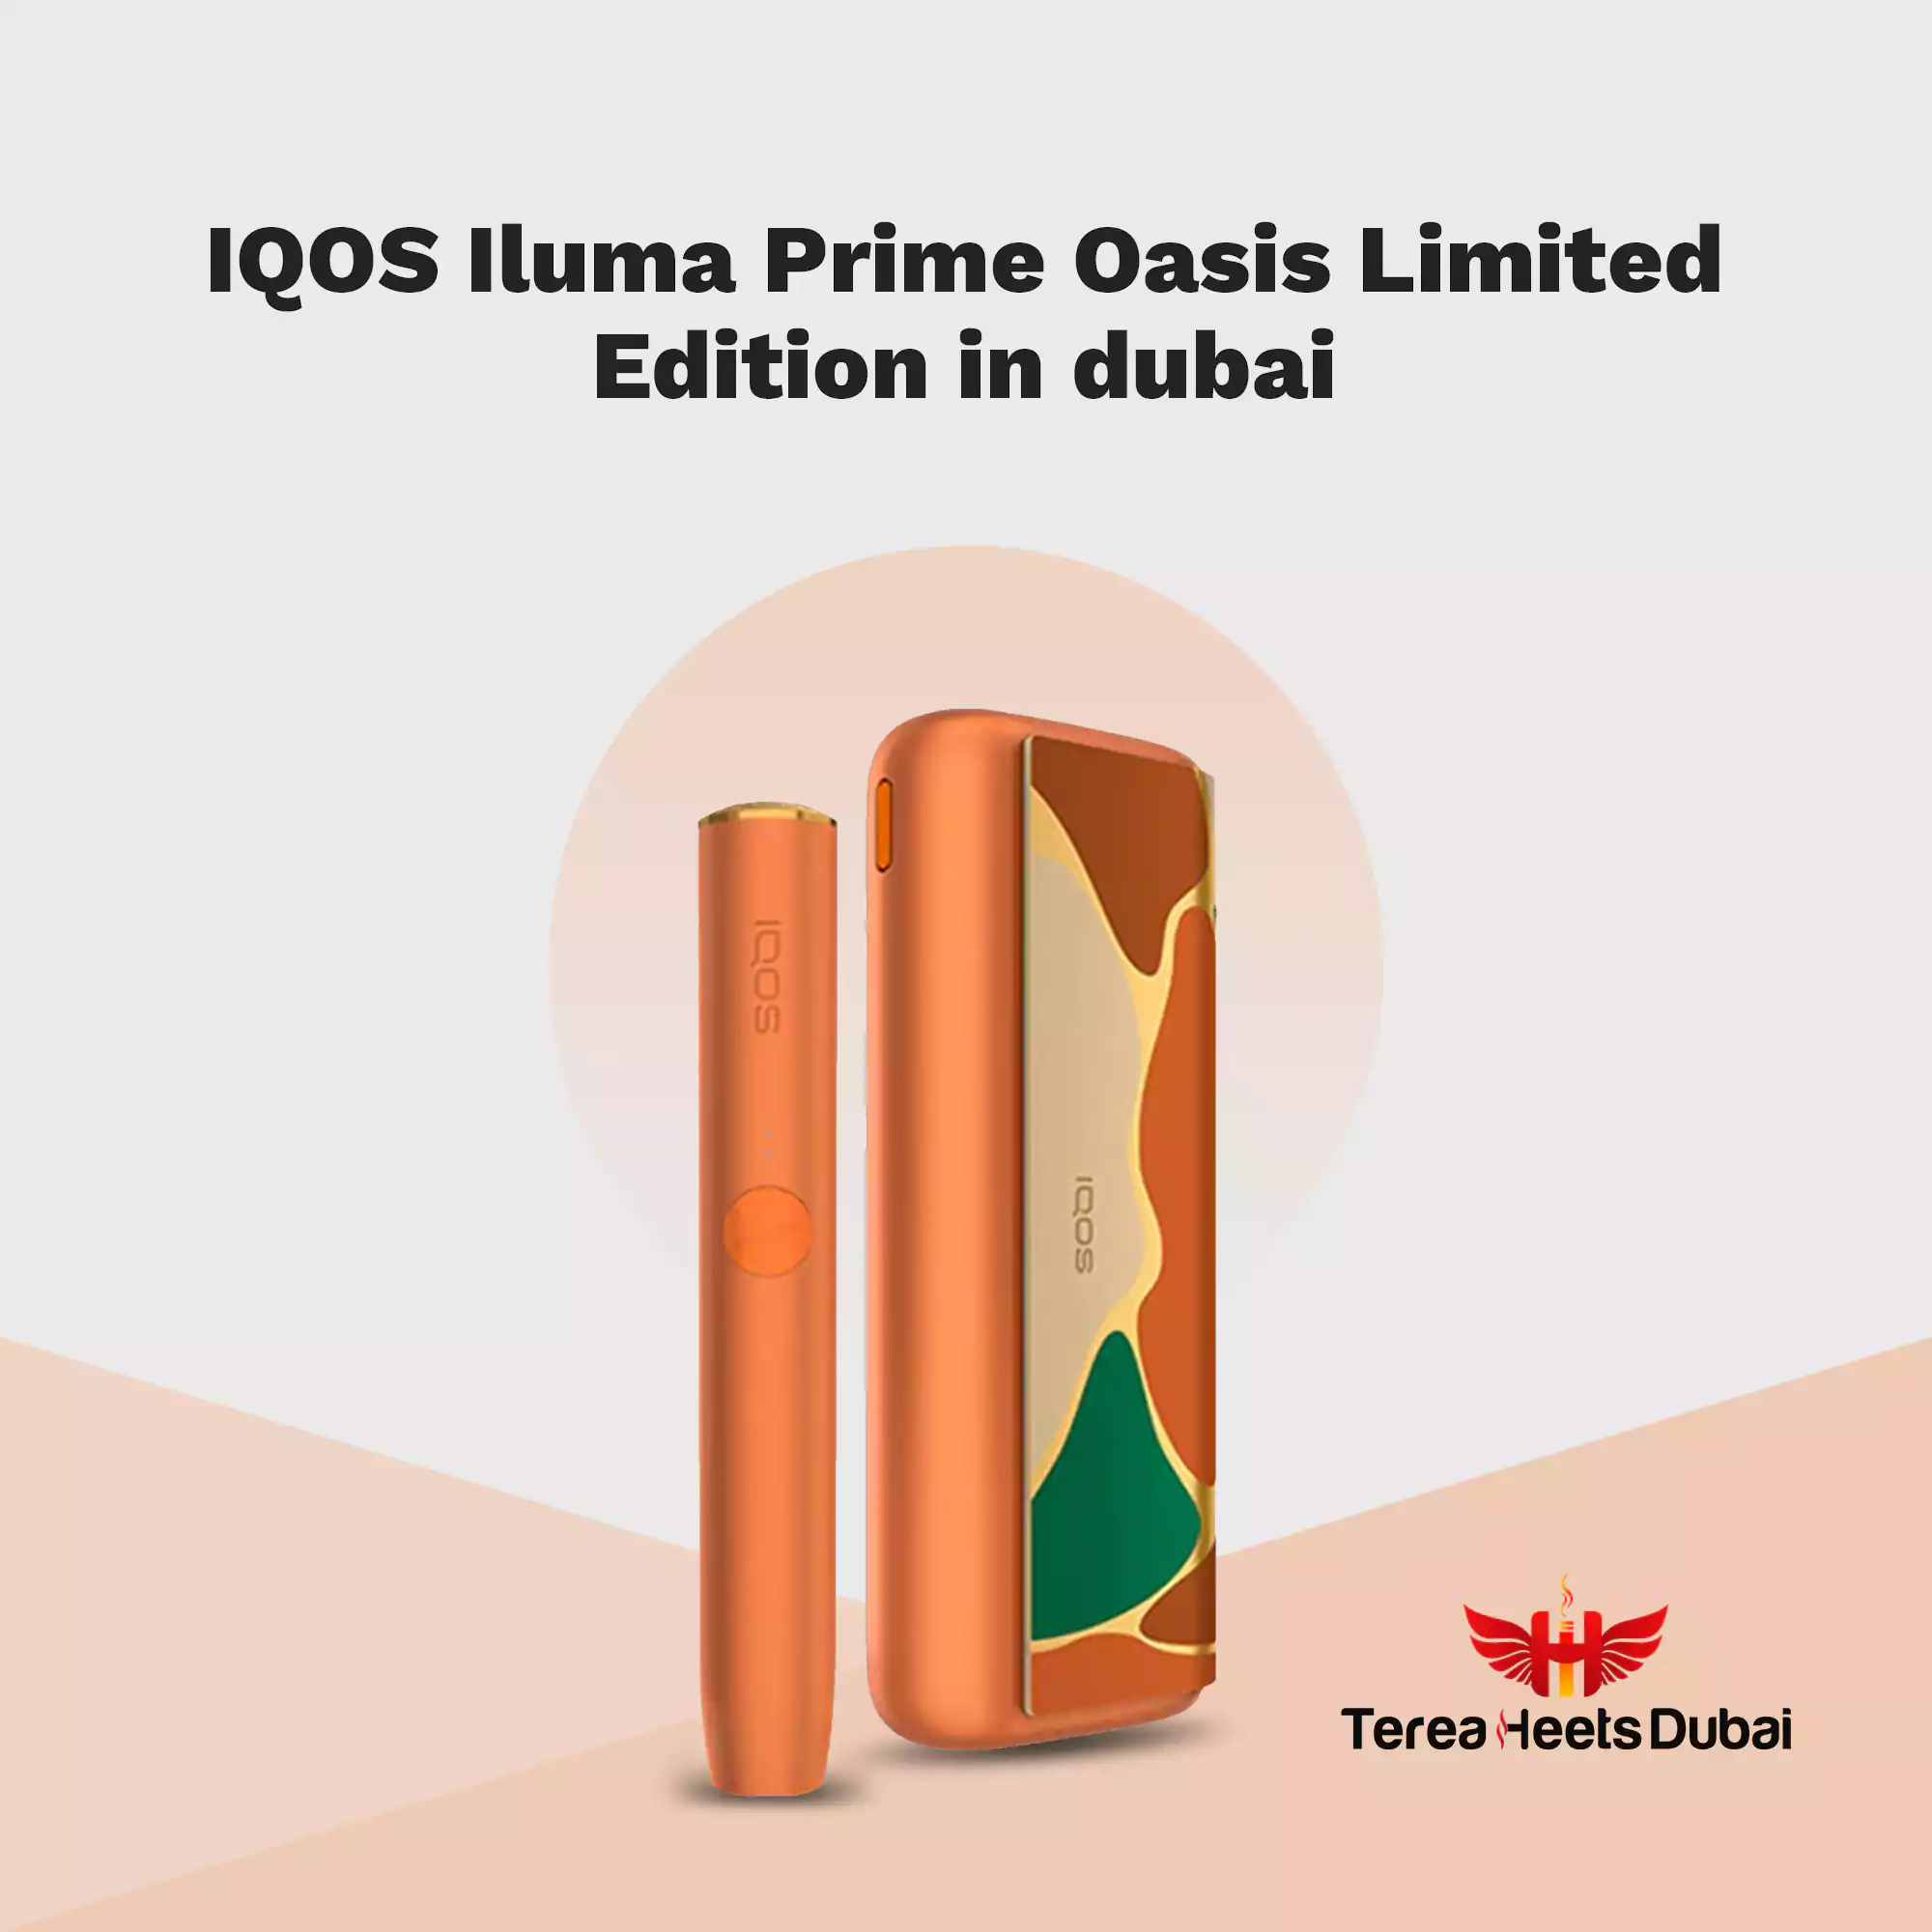 TEREA For IQOS Iluma stick Next level tobacco experience Best with goo –  Luxury Vape Dubai